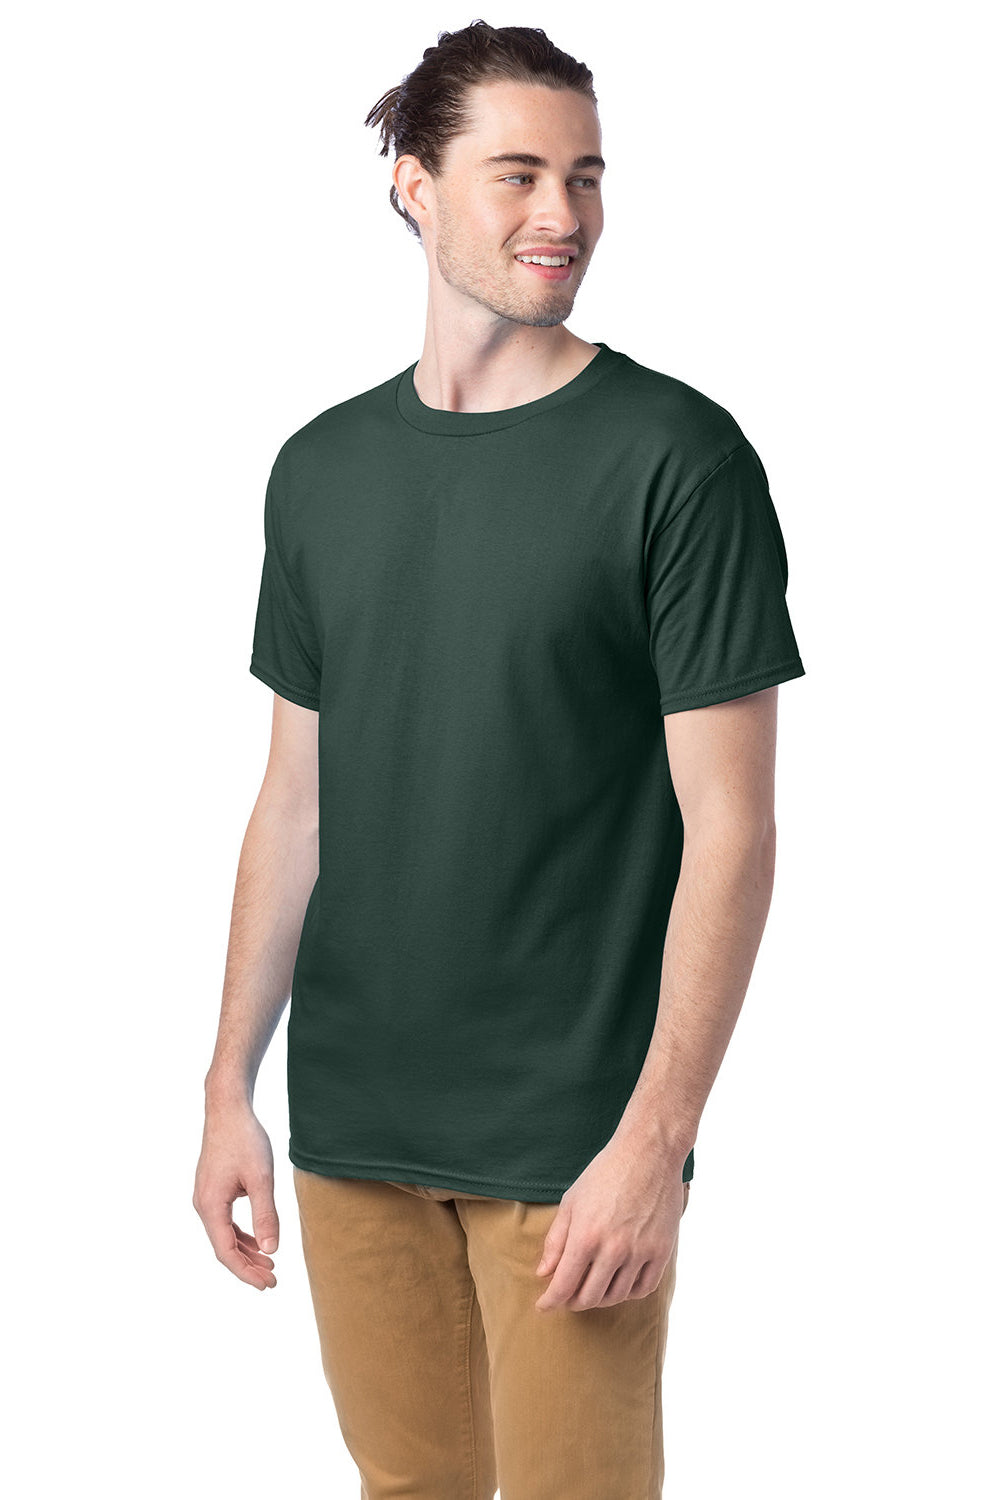 Hanes 5280 Mens ComfortSoft Short Sleeve Crewneck T-Shirt Athletic Dark Green 3Q